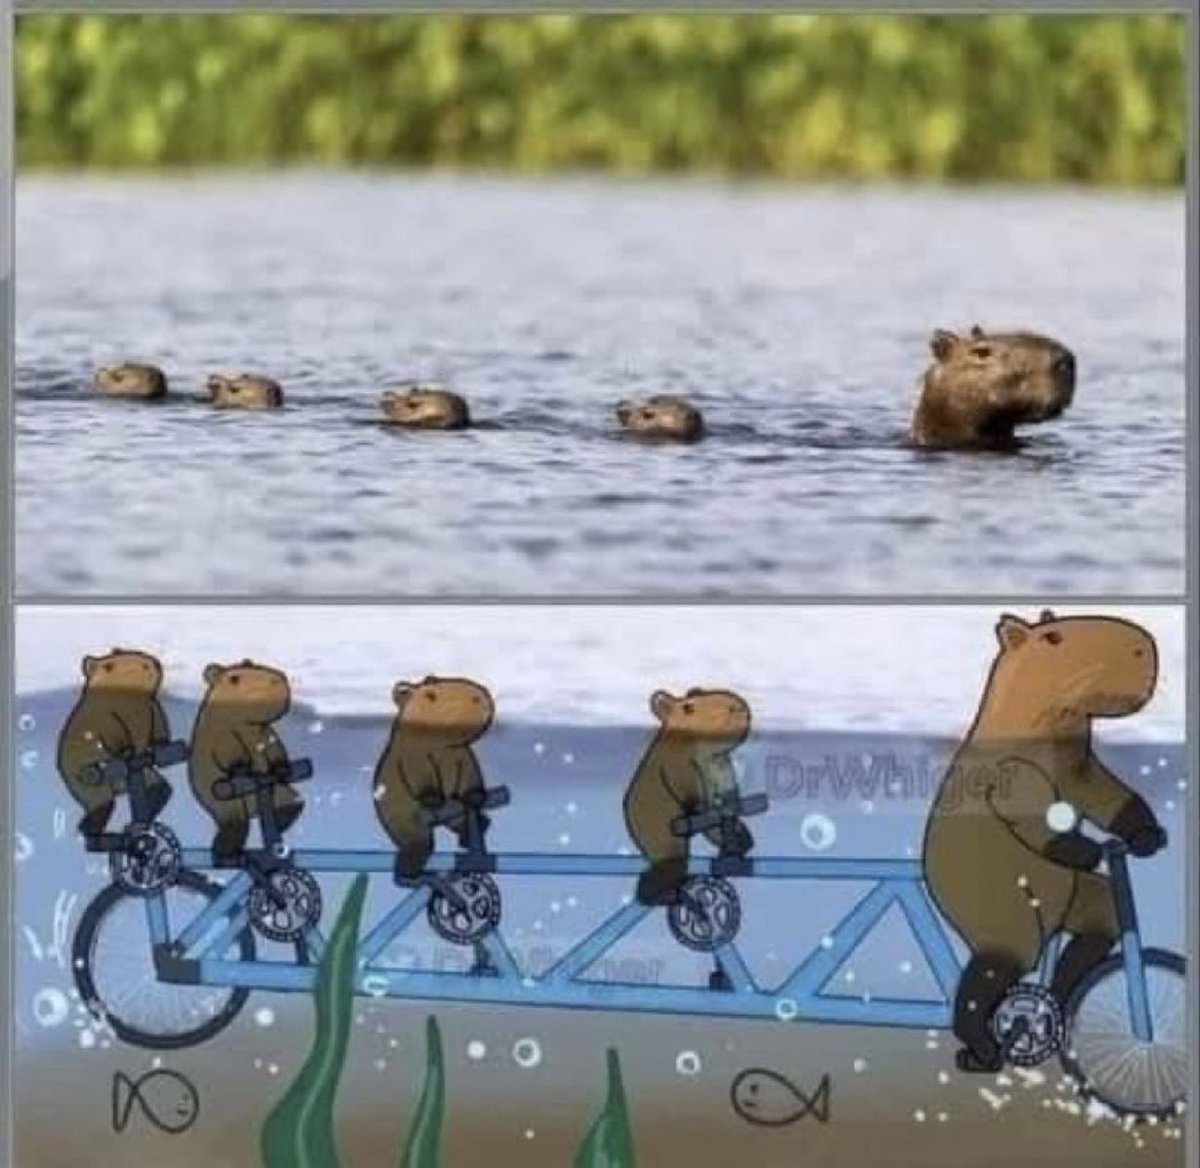 Single file capybara explained